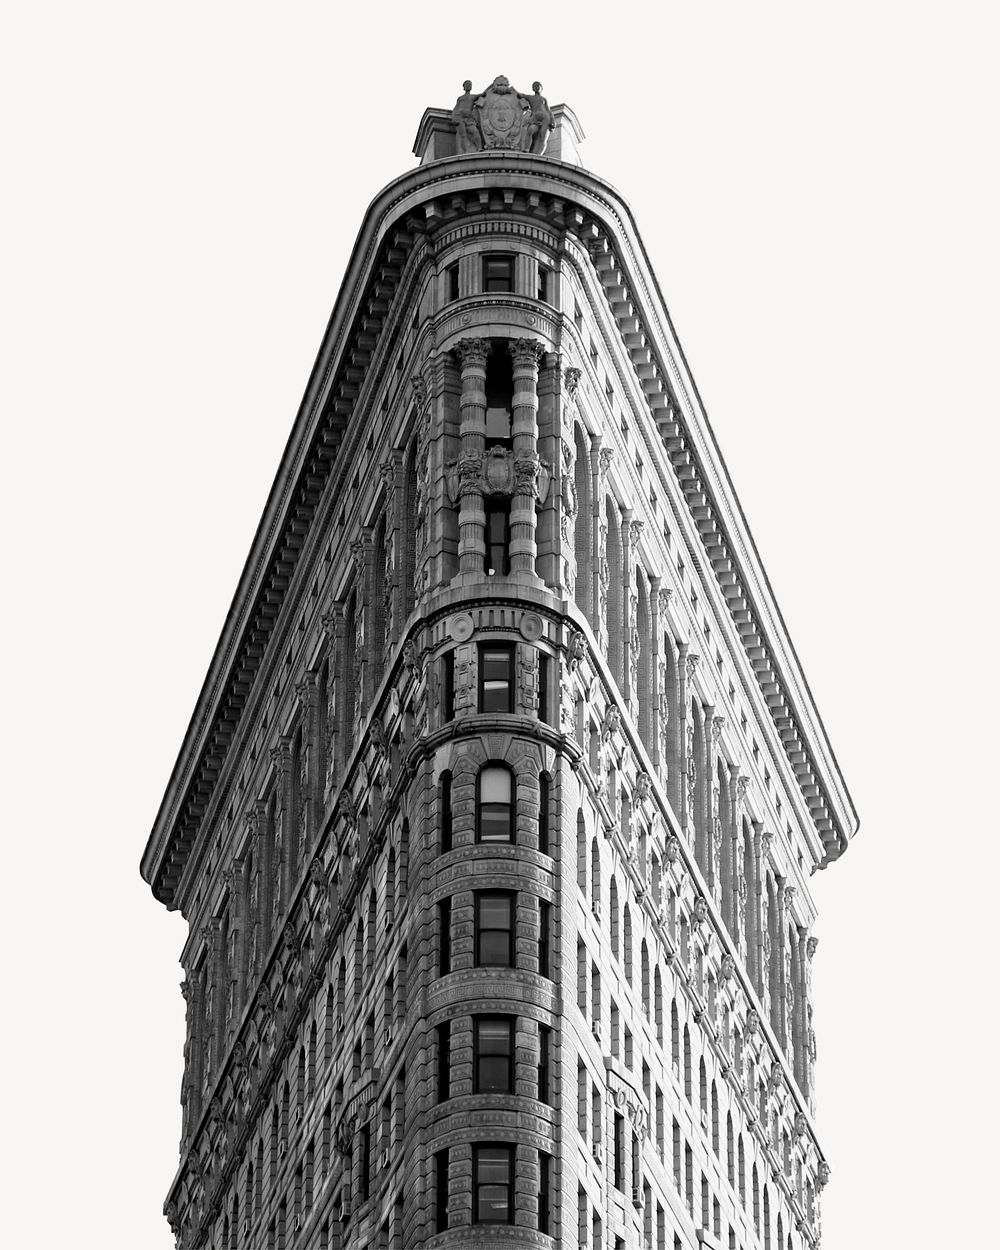 Flatiron Building in New York City collage element psd